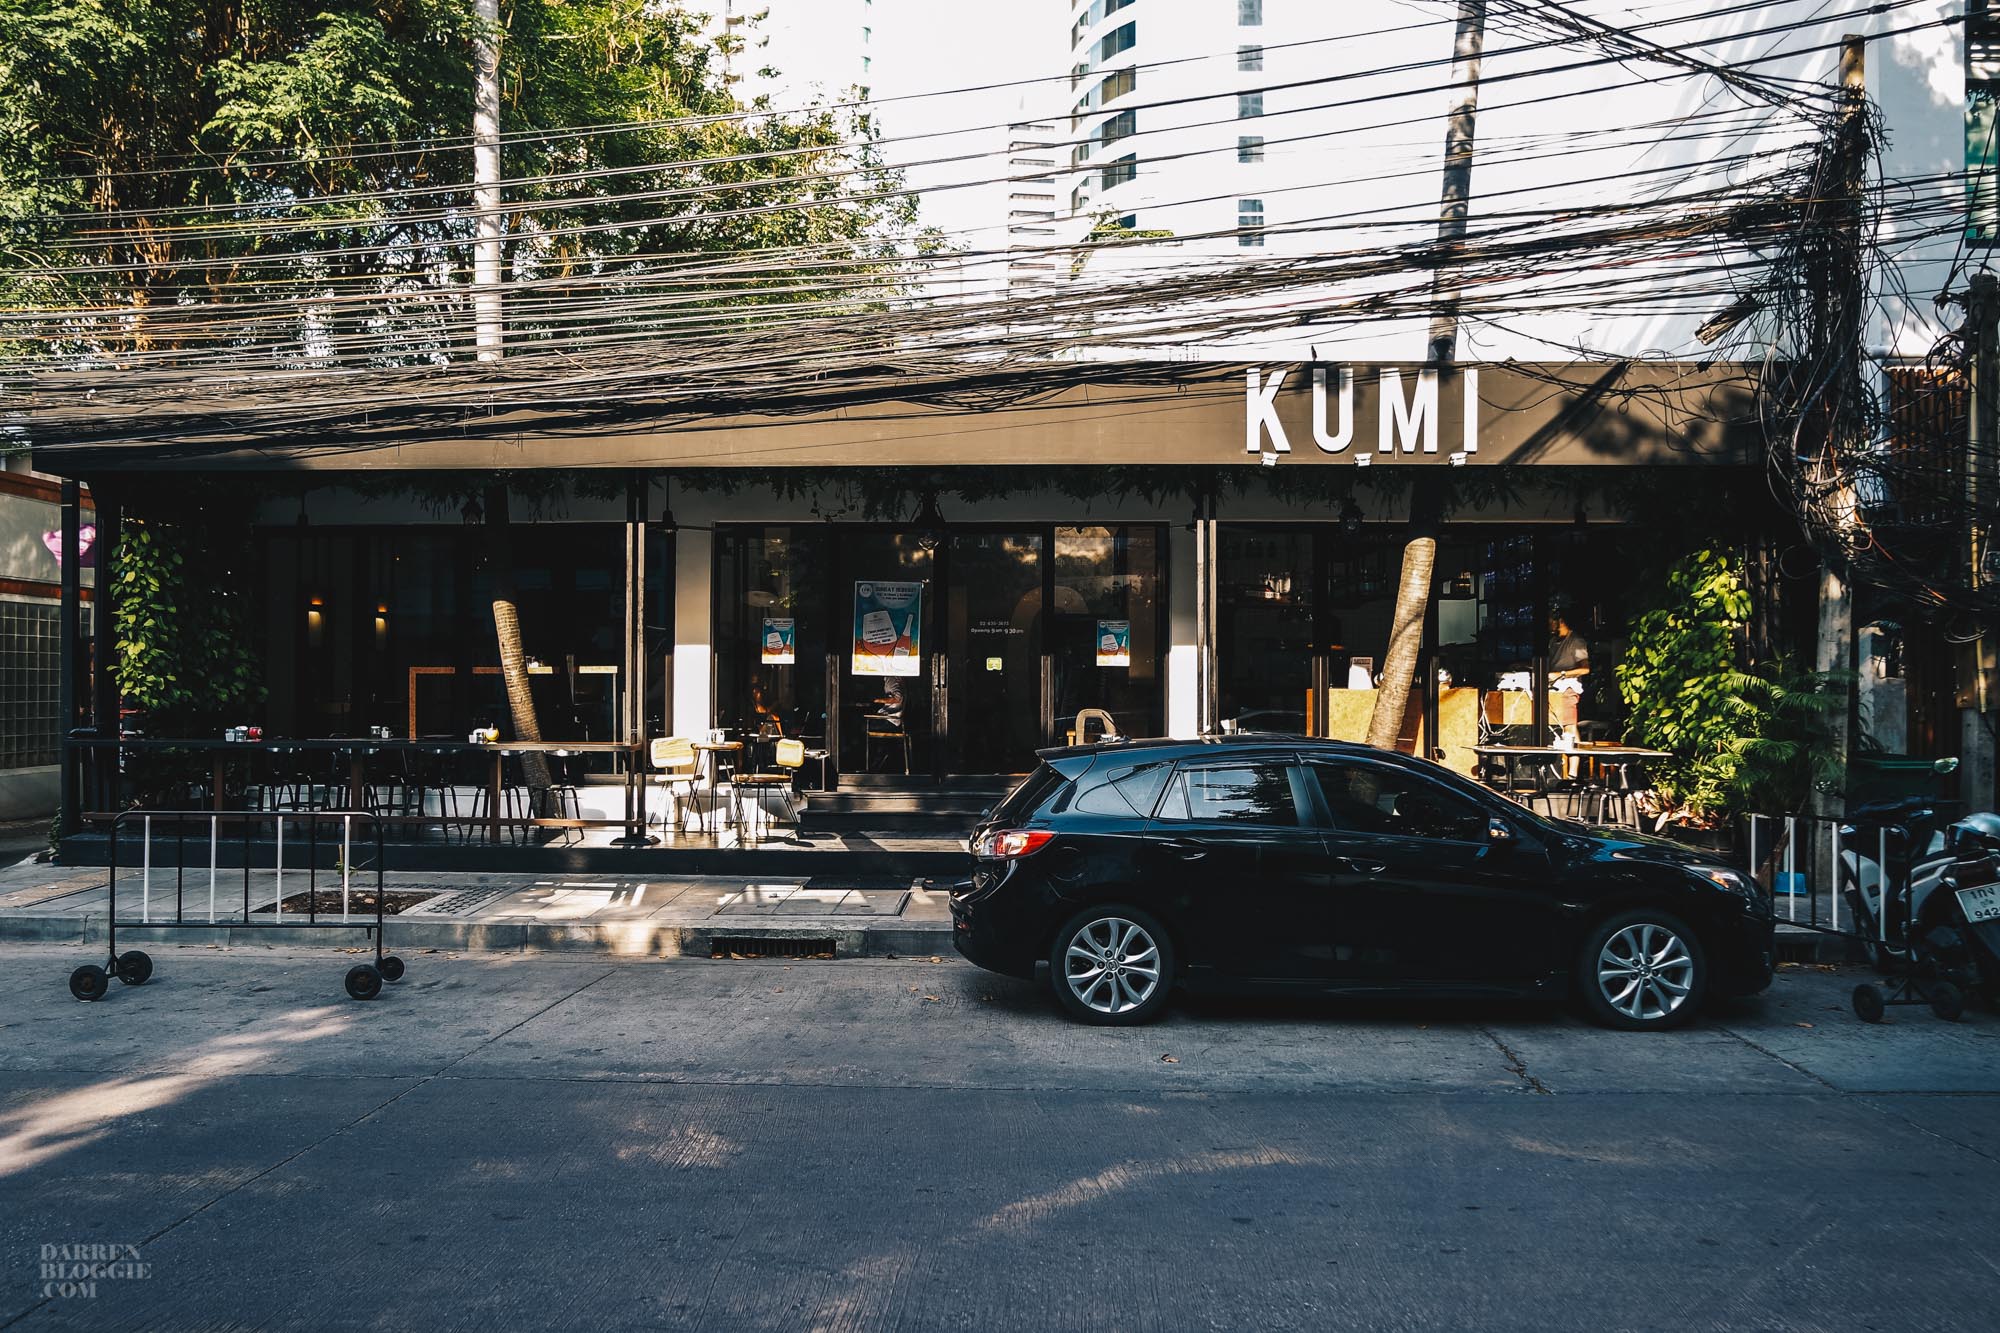 Kumi Restaurant & Healthy Corner - Clean Bites that go Beyond Salad in Bangkok